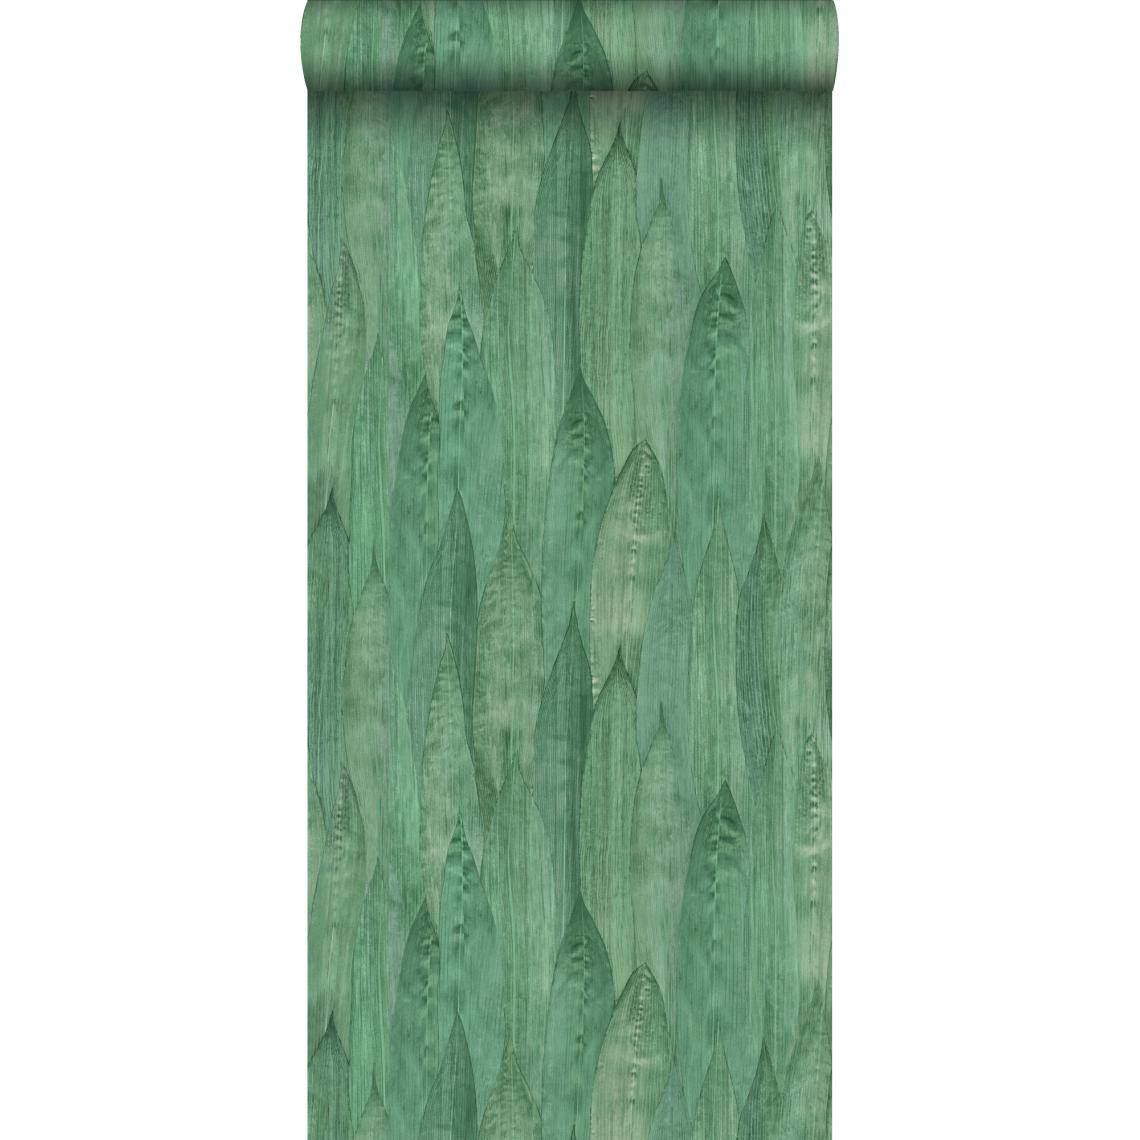 ESTAhome - ESTAhome papier peint feuilles vert jade - 138987 - 0.53 x 10.05 m - Papier peint